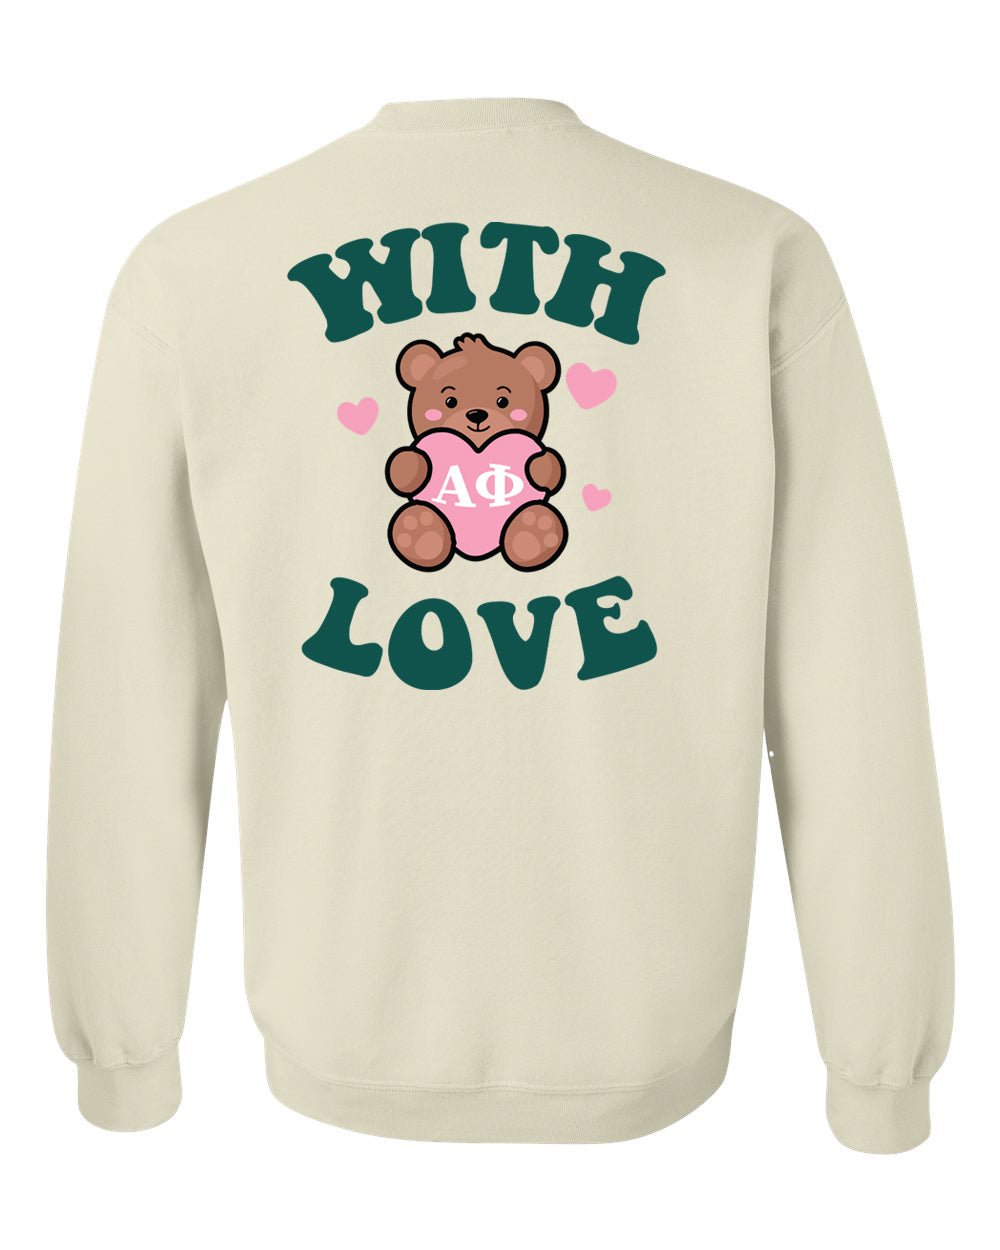 a white sweatshirt with a teddy bear holding a heart